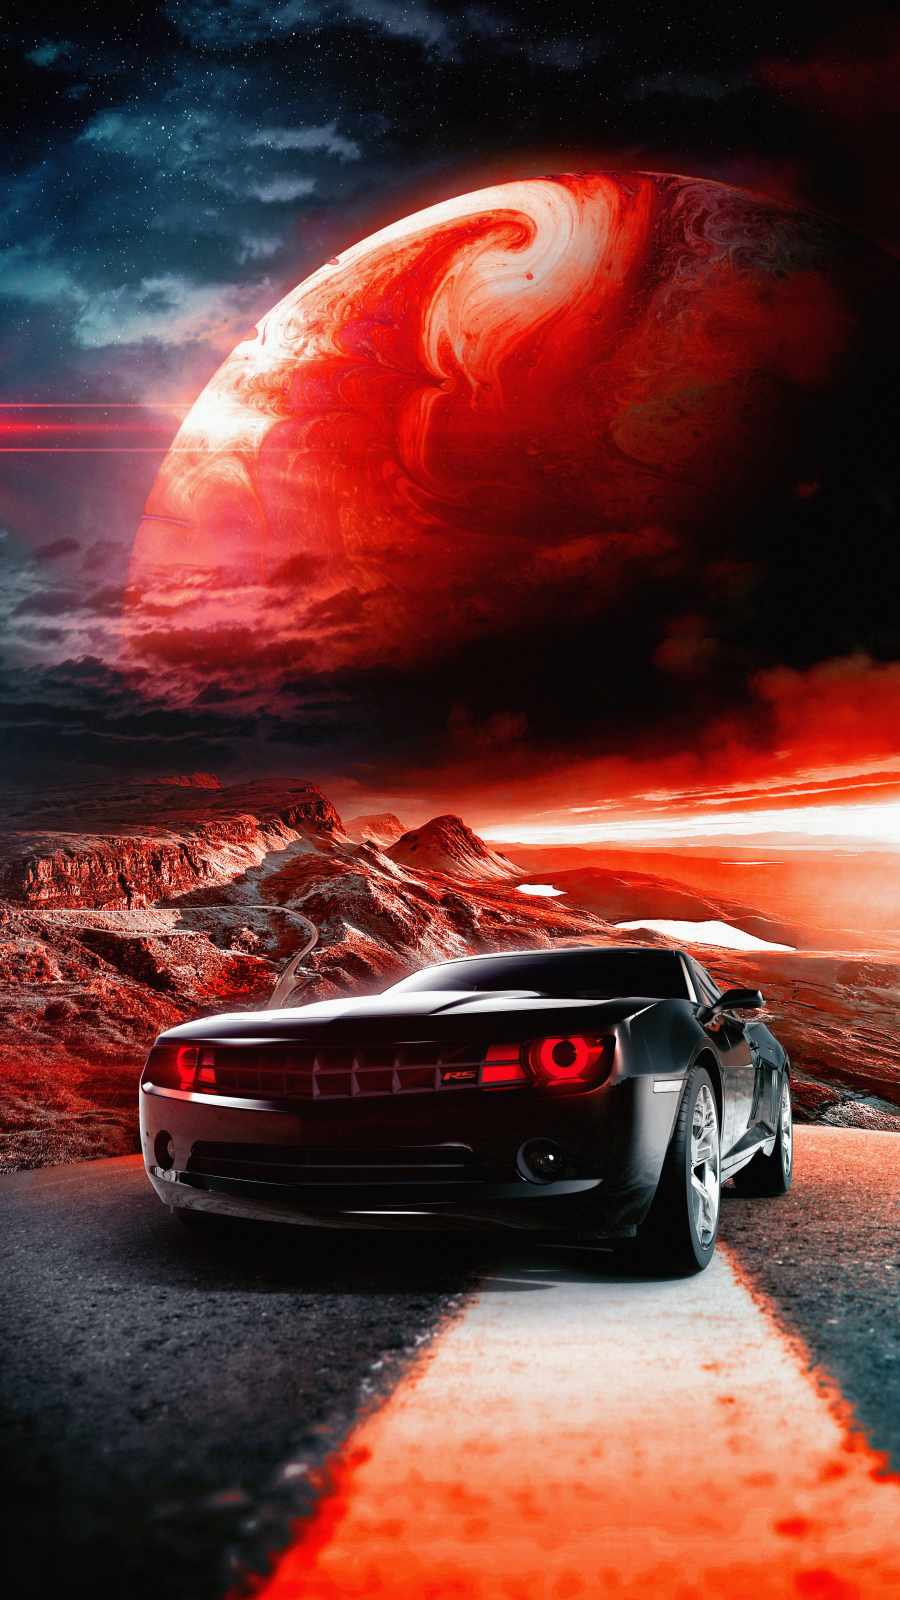 Camaro on Mars iPhone Wallpaper